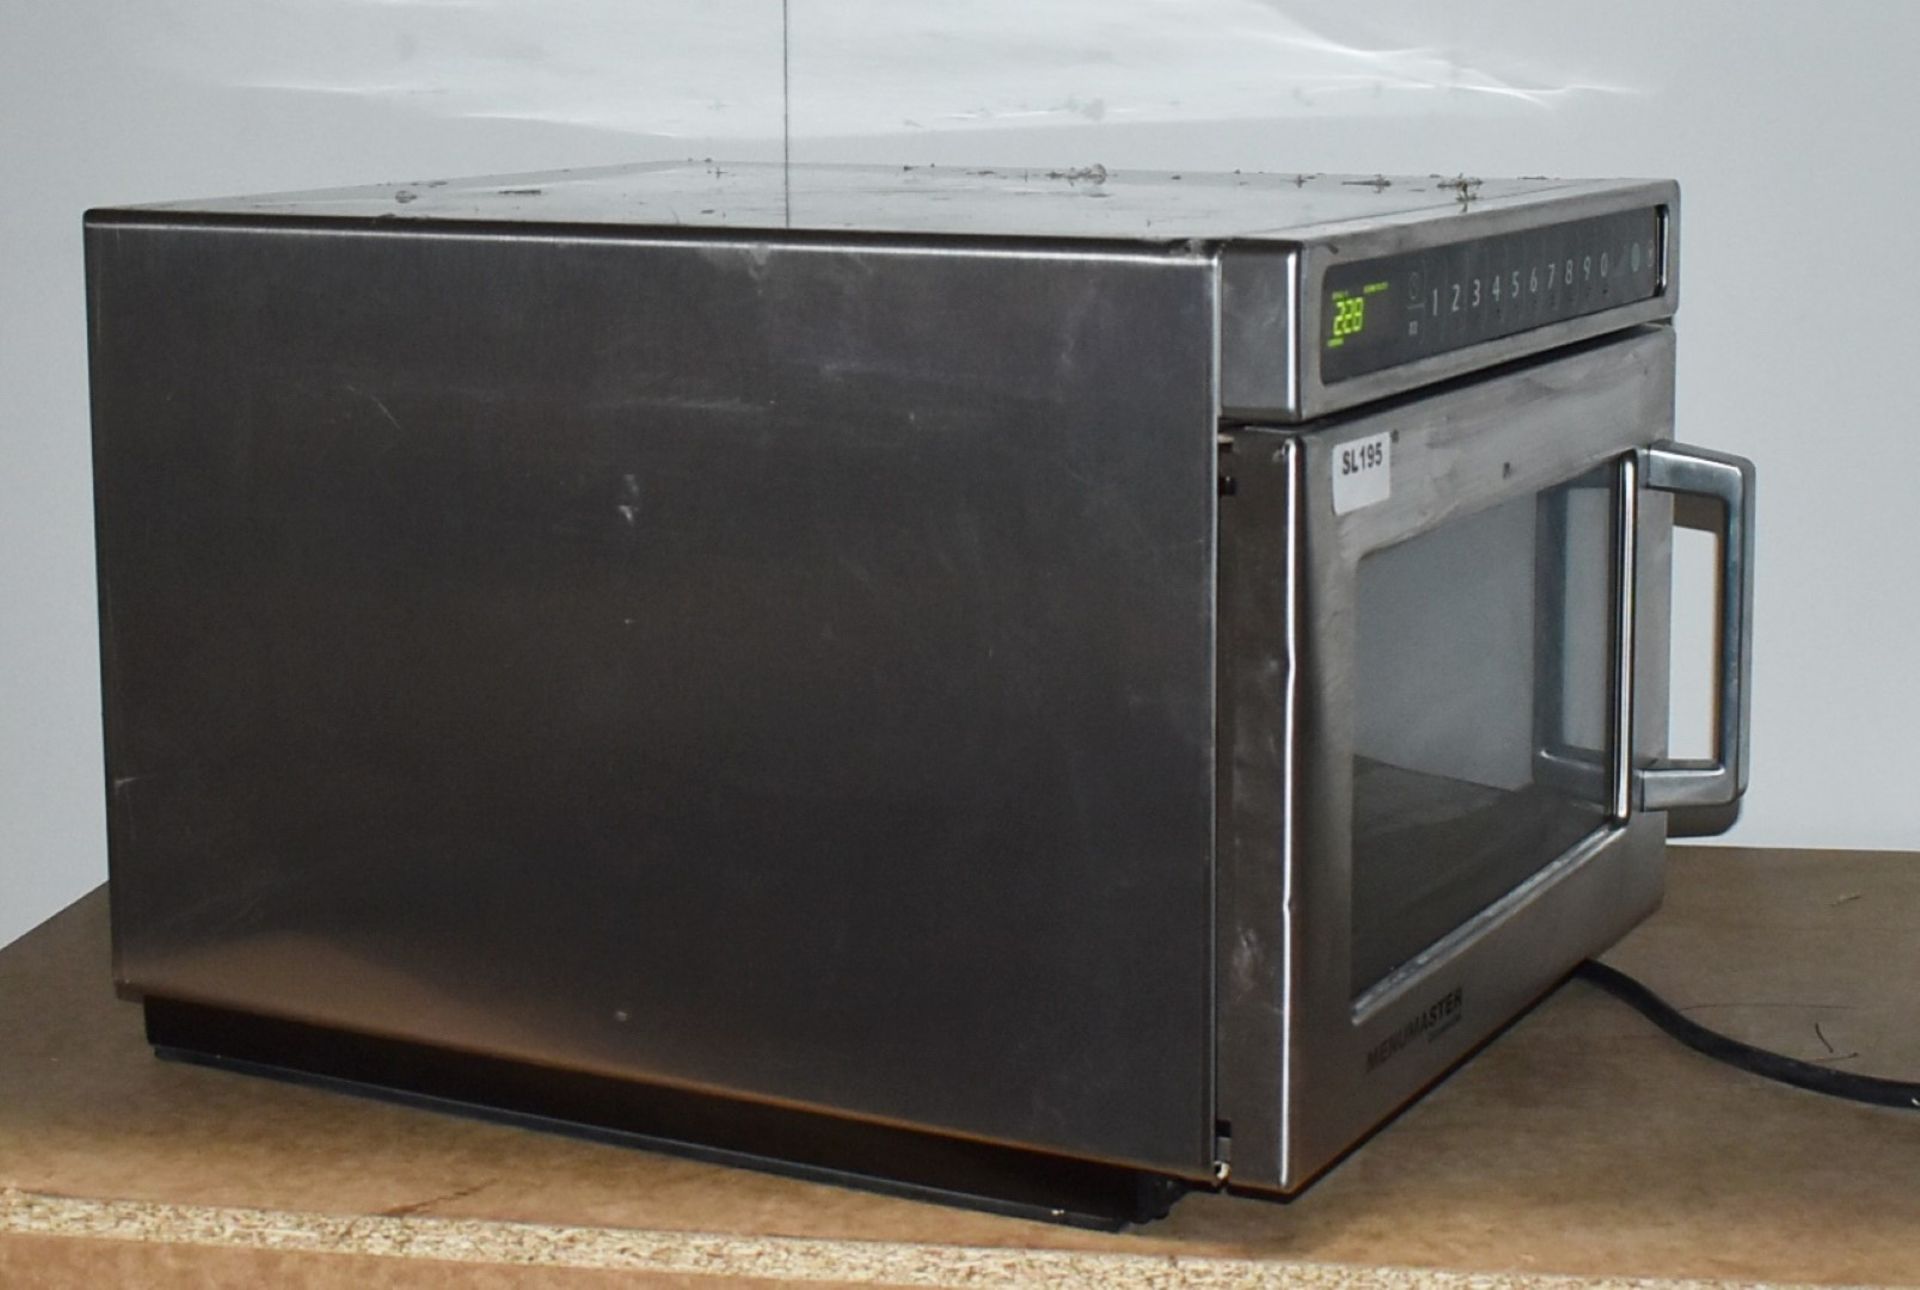 1 x Menumaster Commercial Microwave Oven - Model DEC14E2U - 1.4kW, 13A, 17Ltr - 2018 Model - - Image 6 of 12